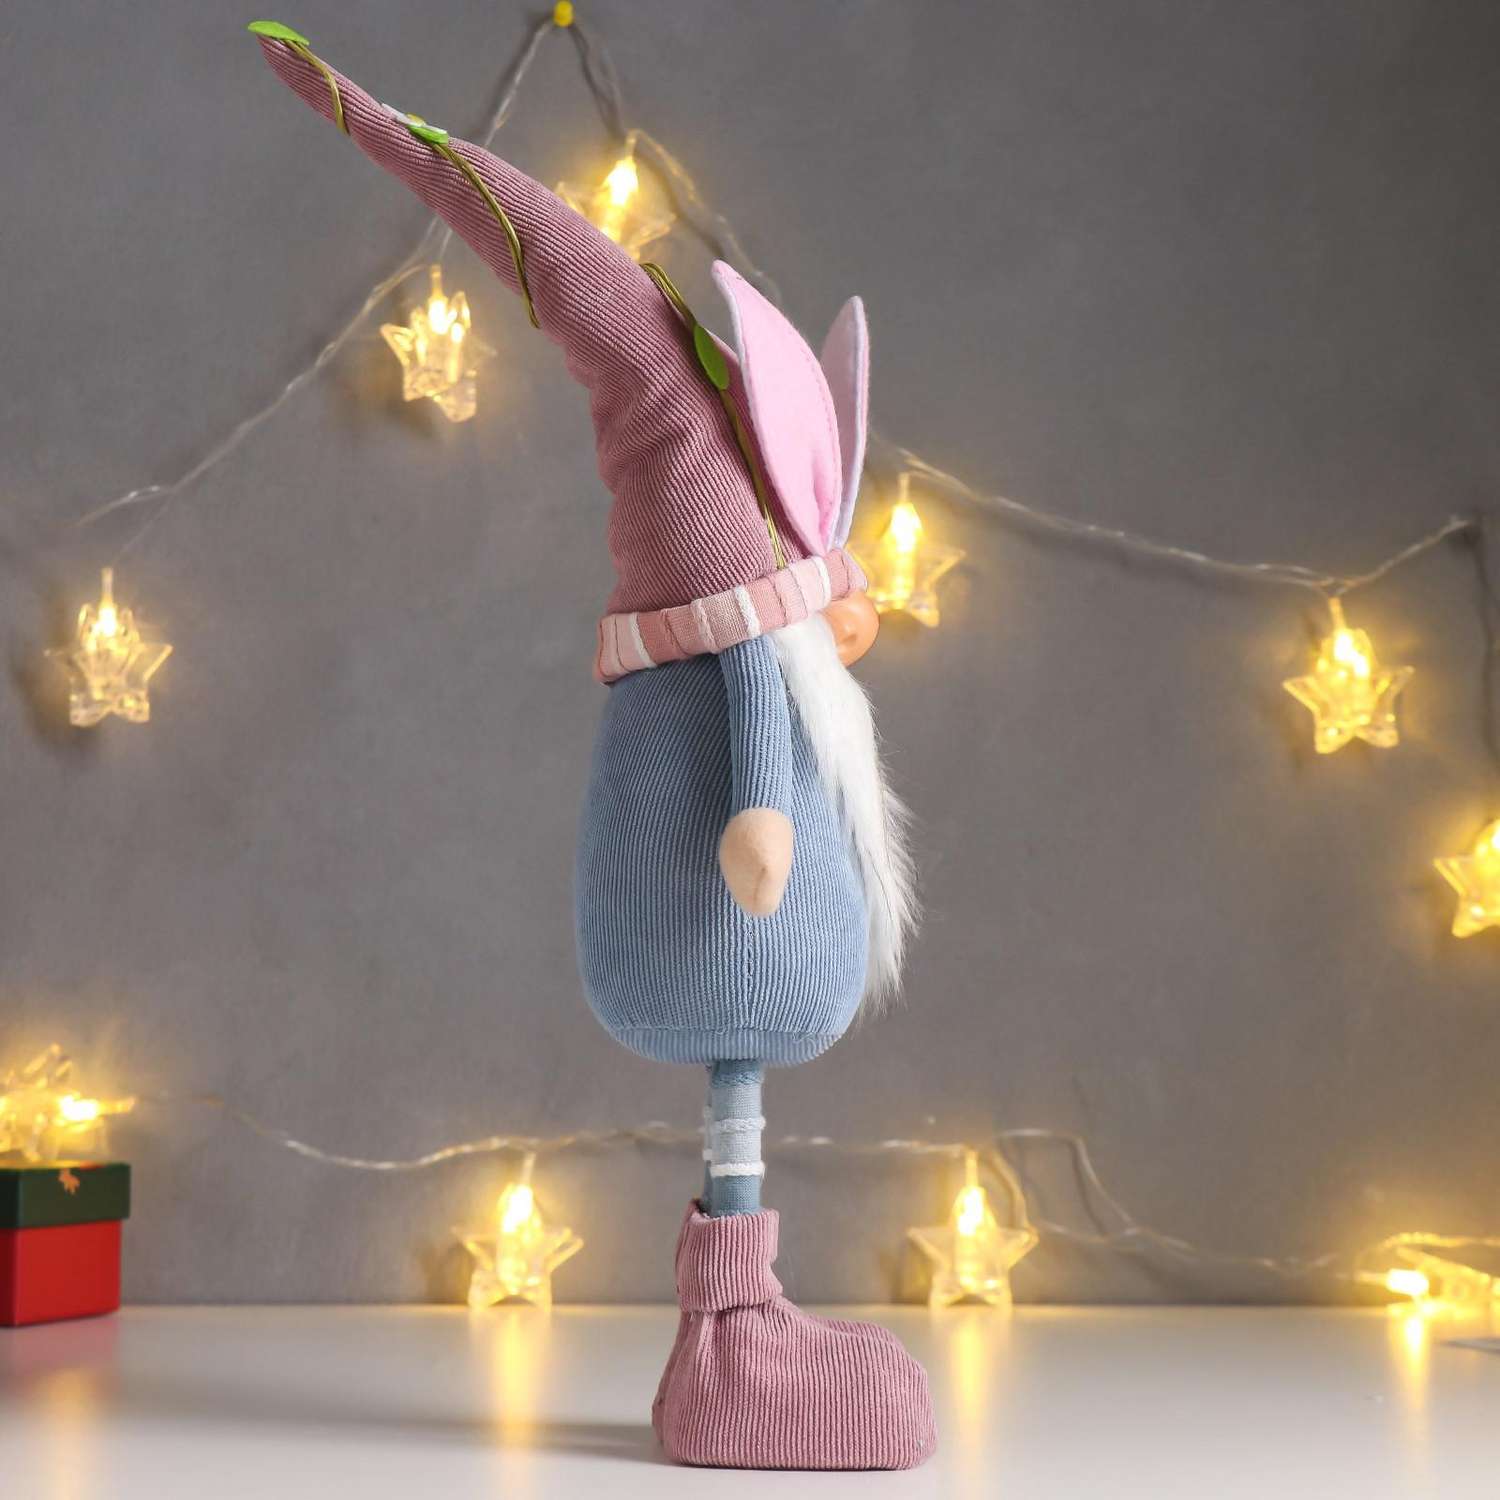 Кукла интерьерная Зимнее волшебство «Дед Мороз в розово-голубом наряде в колпаке с ушками» 48х10х13 см - фото 2